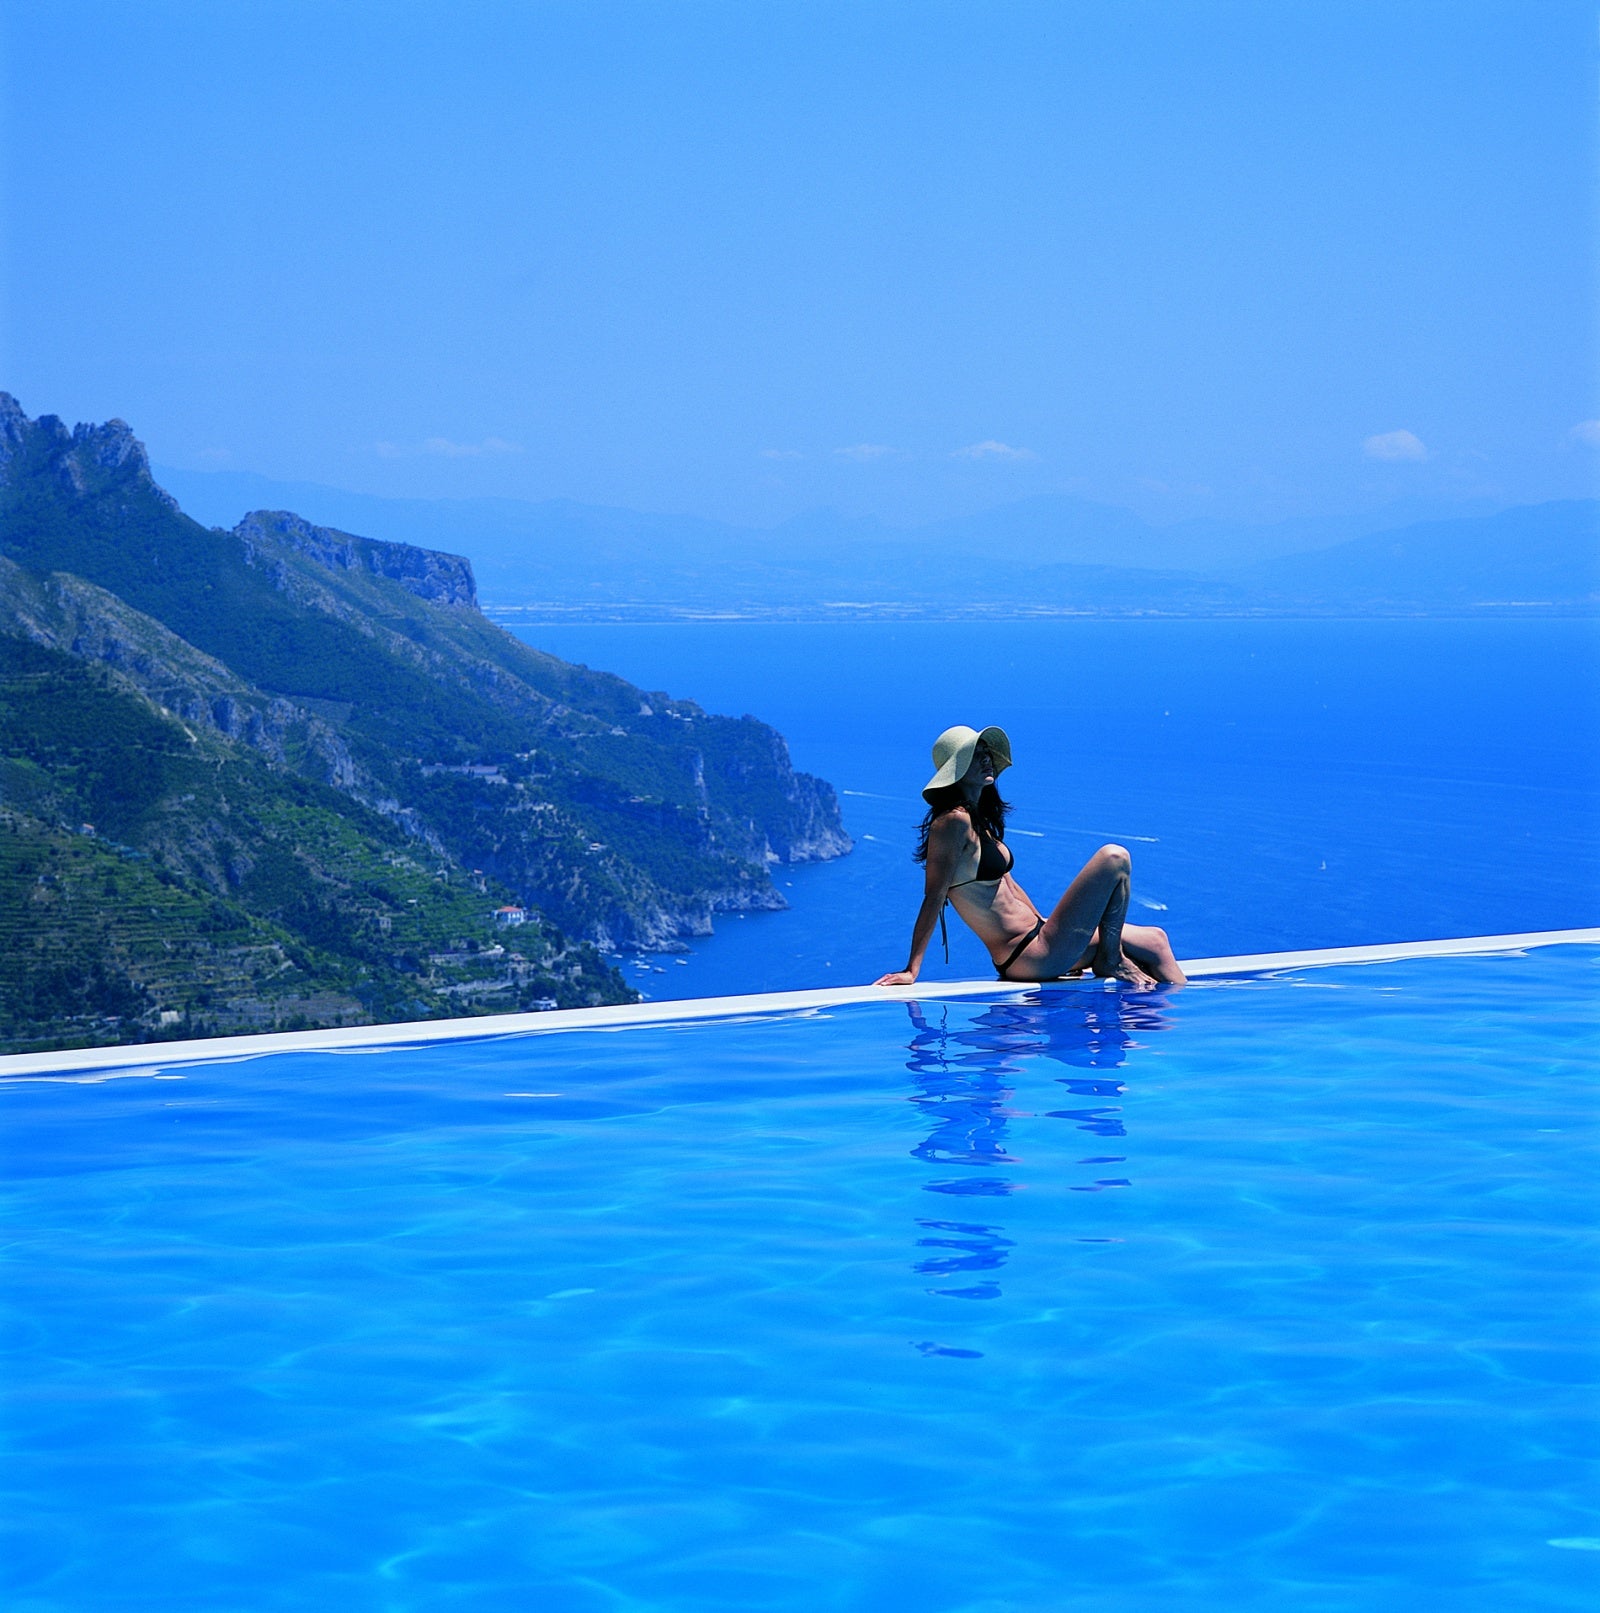 Hotel Caruso - A Perfect Mediterranean Palace On The Amalfi Coast